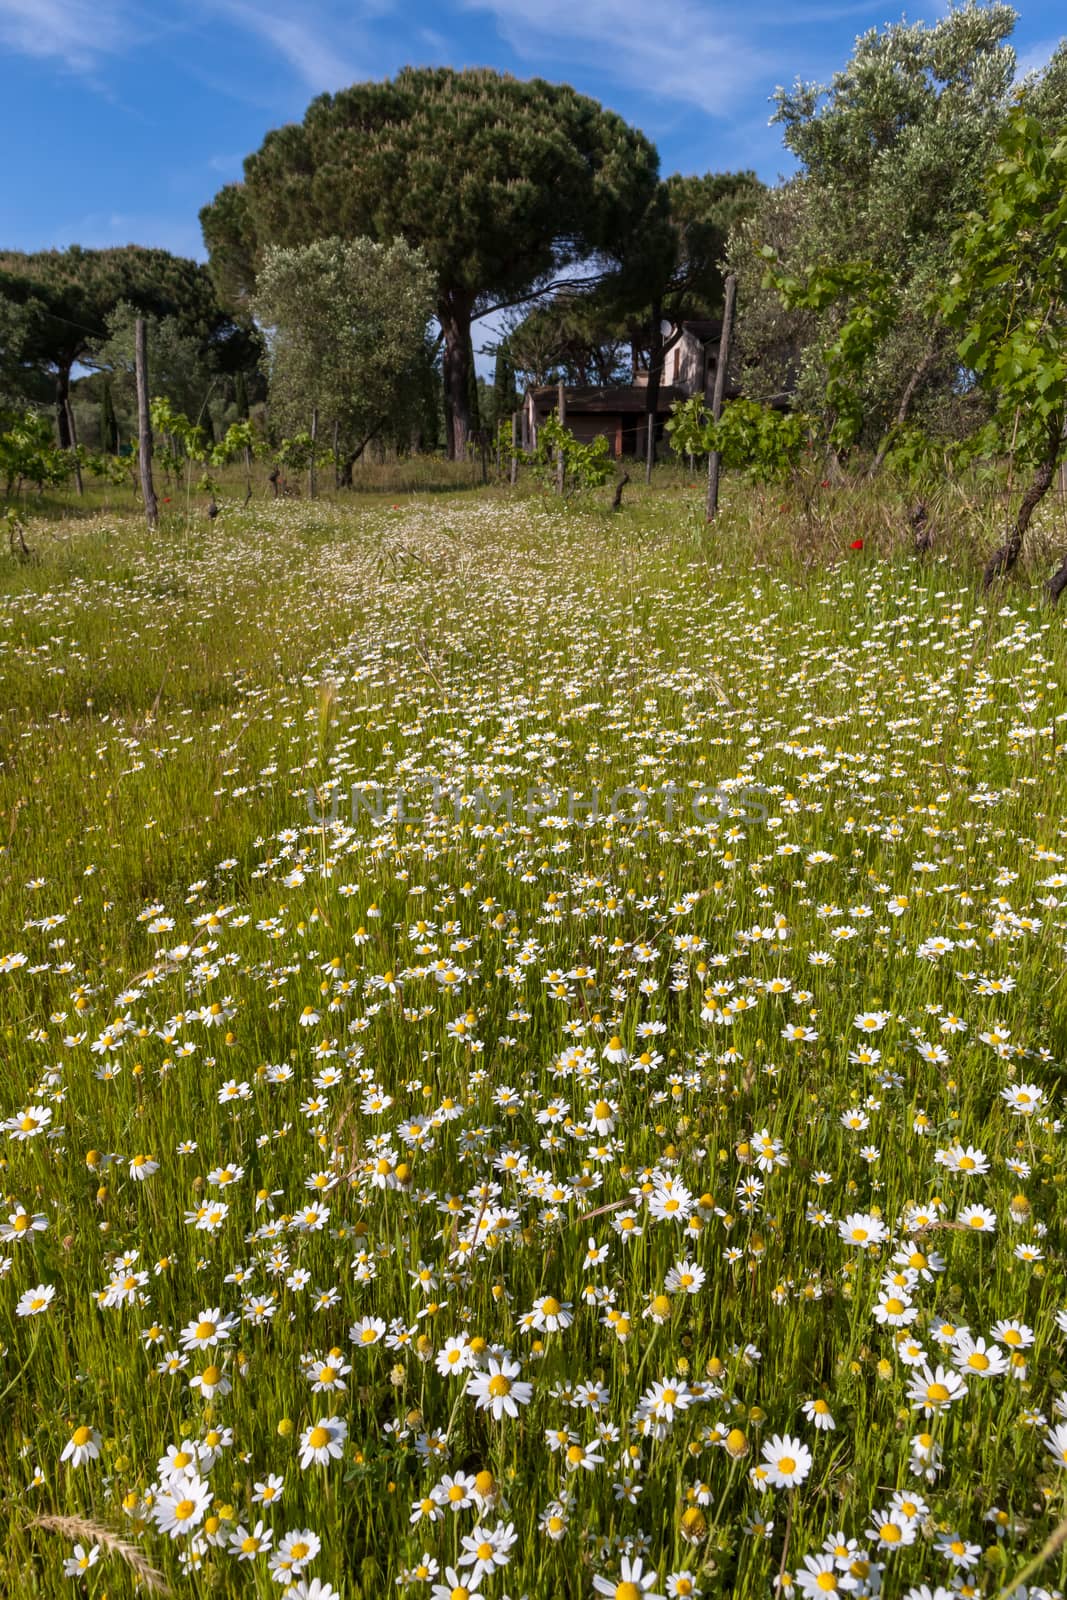 The meadow of spring white wild daisies